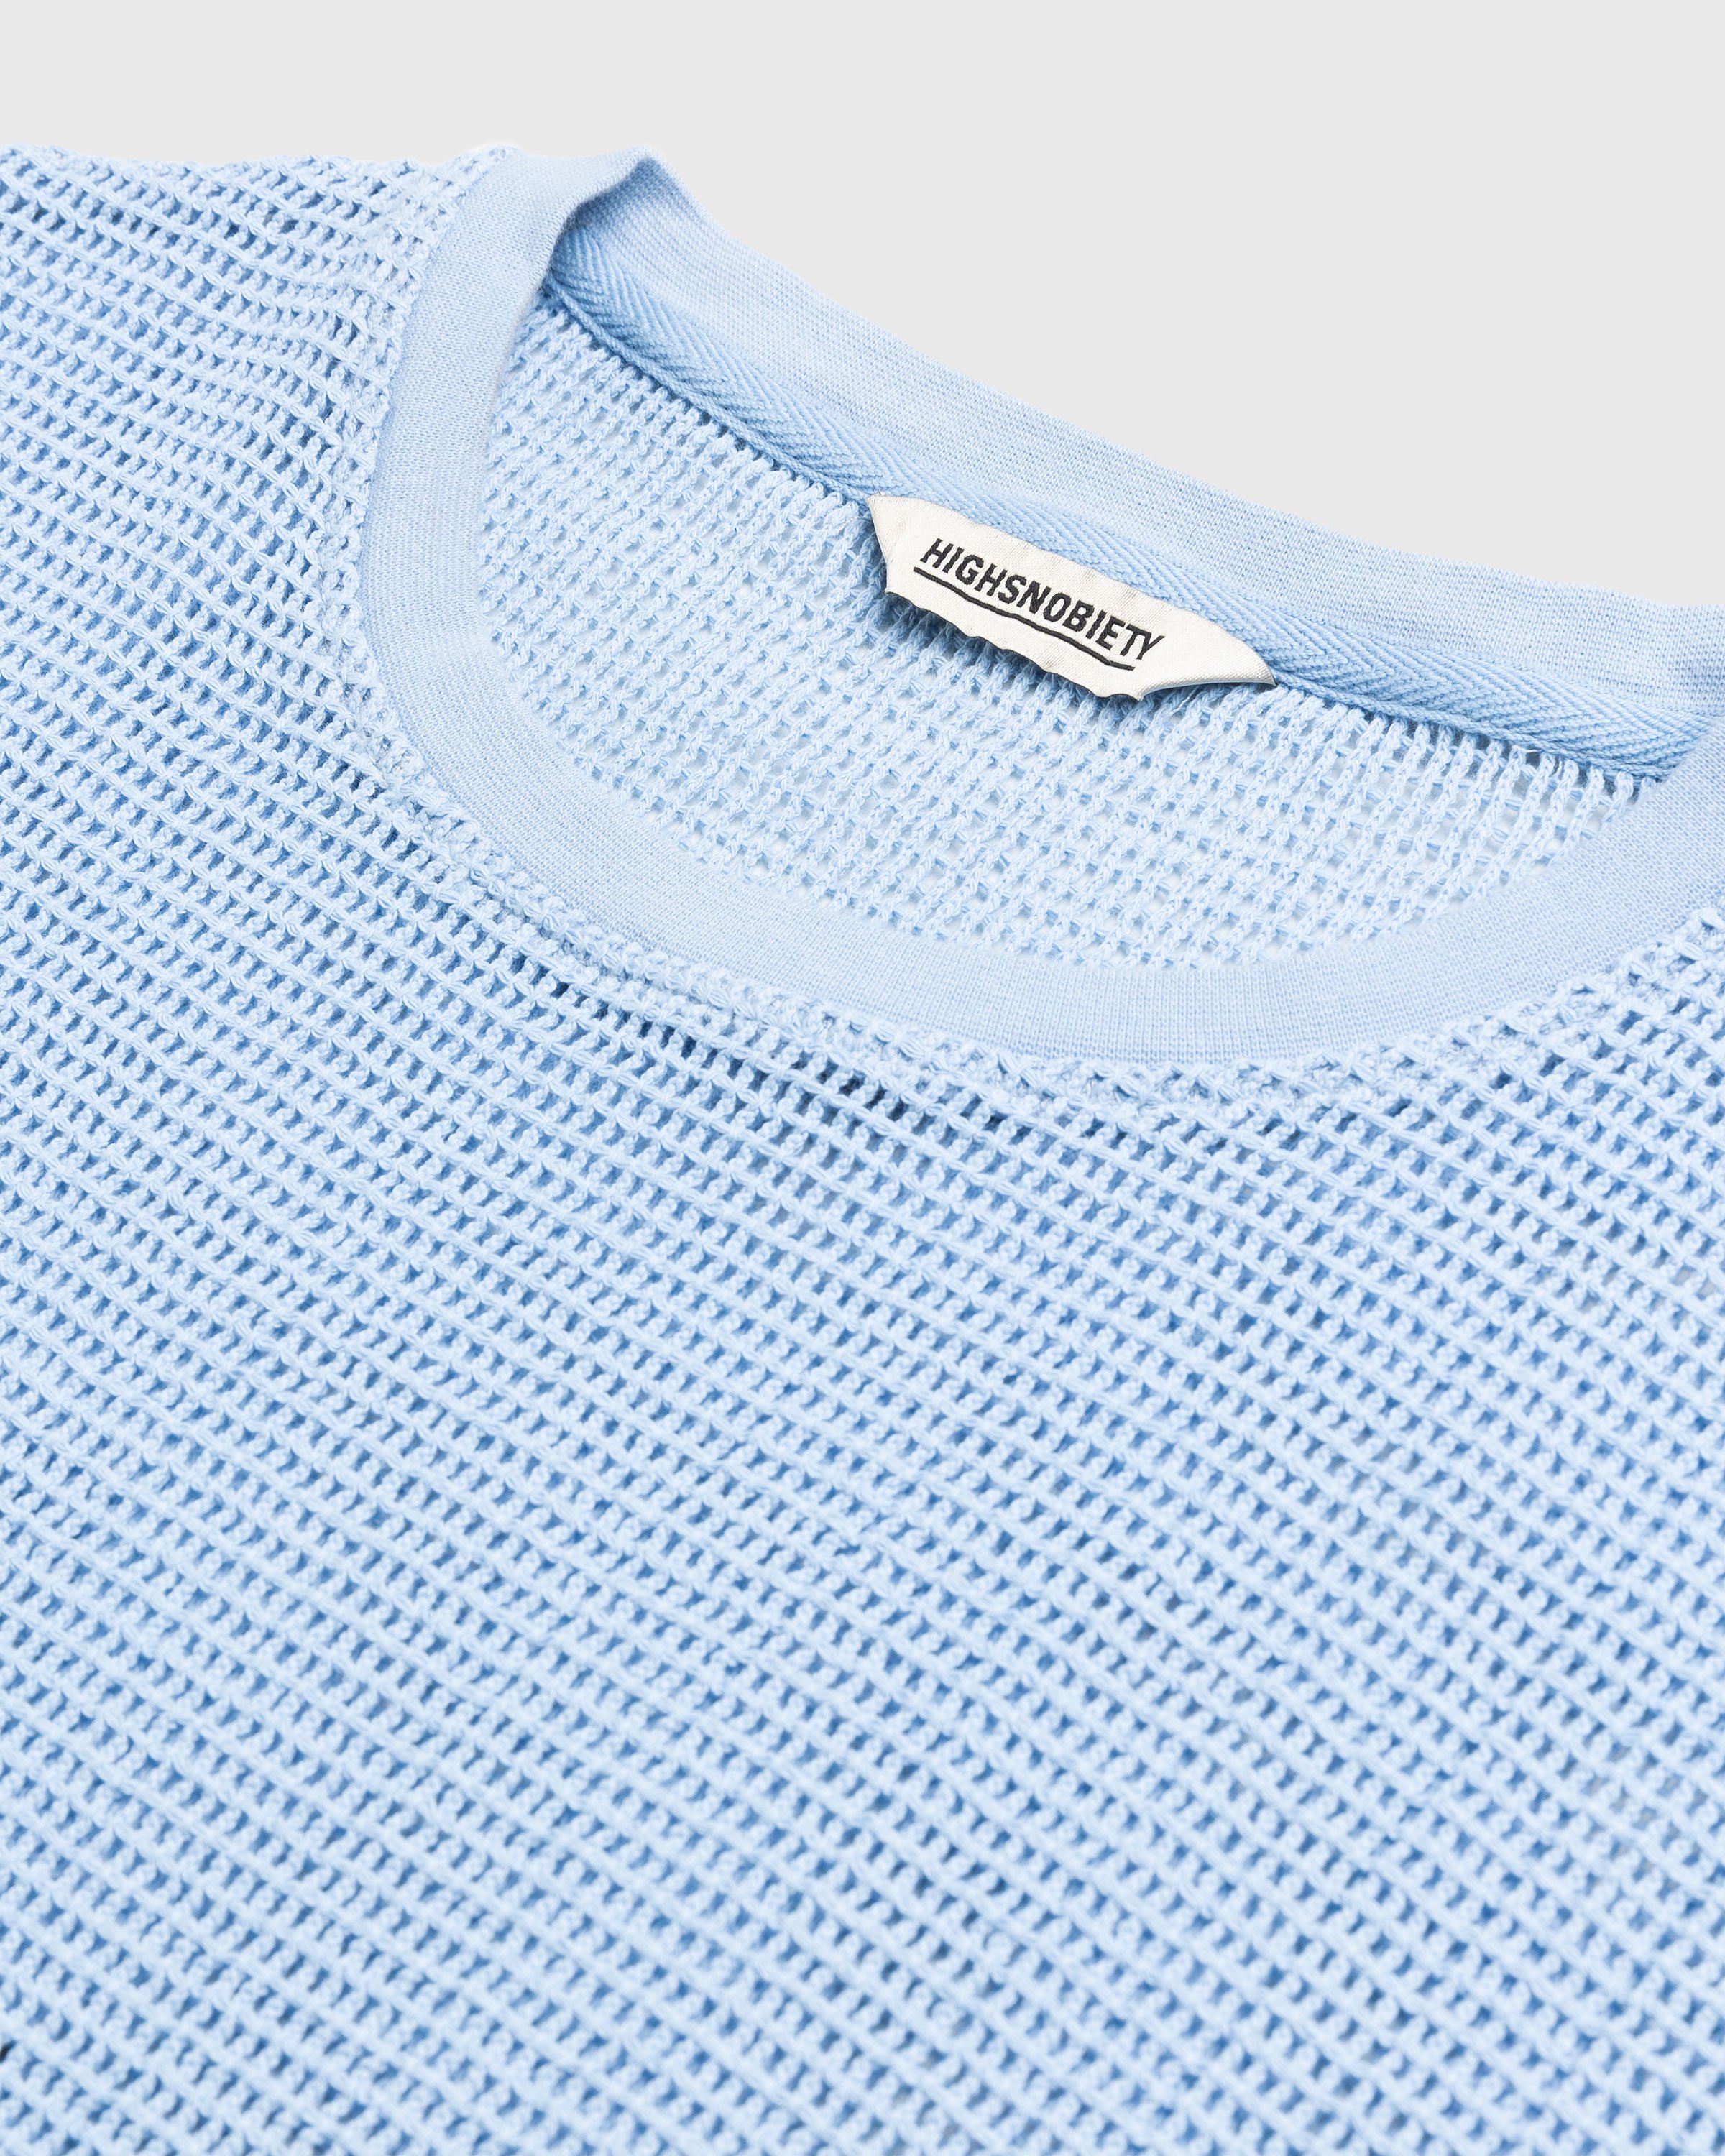 Highsnobiety - Cotton Mesh Knit T-Shirt Blue - Clothing - Blue - Image 6